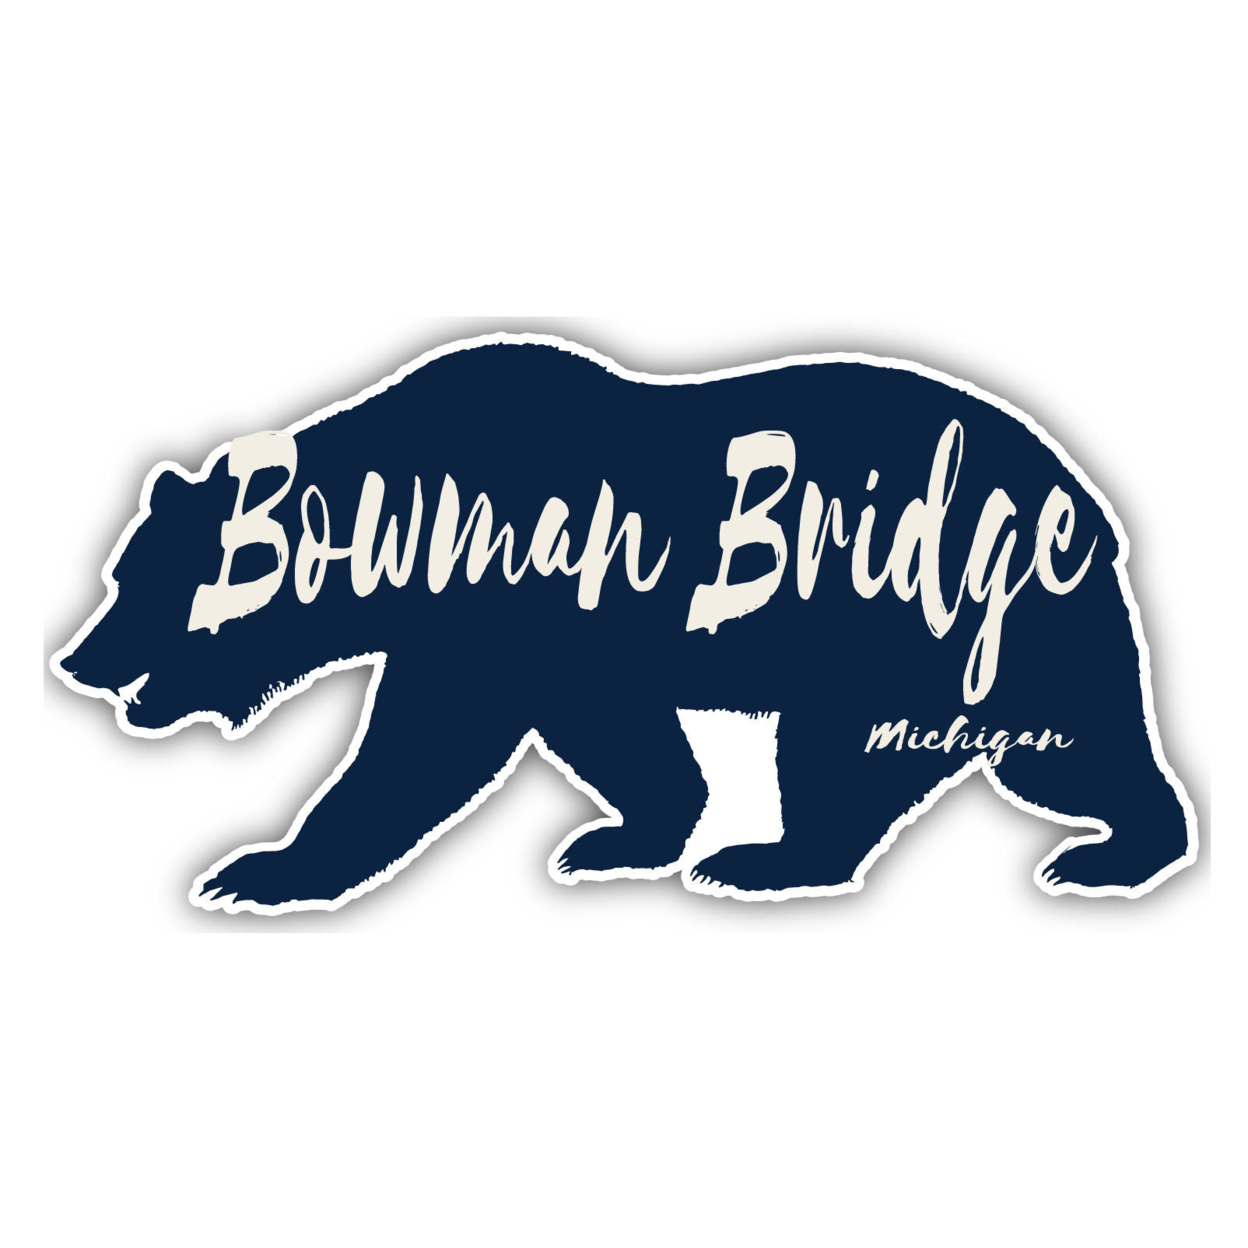 Bowman Bridge Michigan Souvenir Decorative Stickers (Choose Theme And Size) - 4-Pack, 10-Inch, Bear